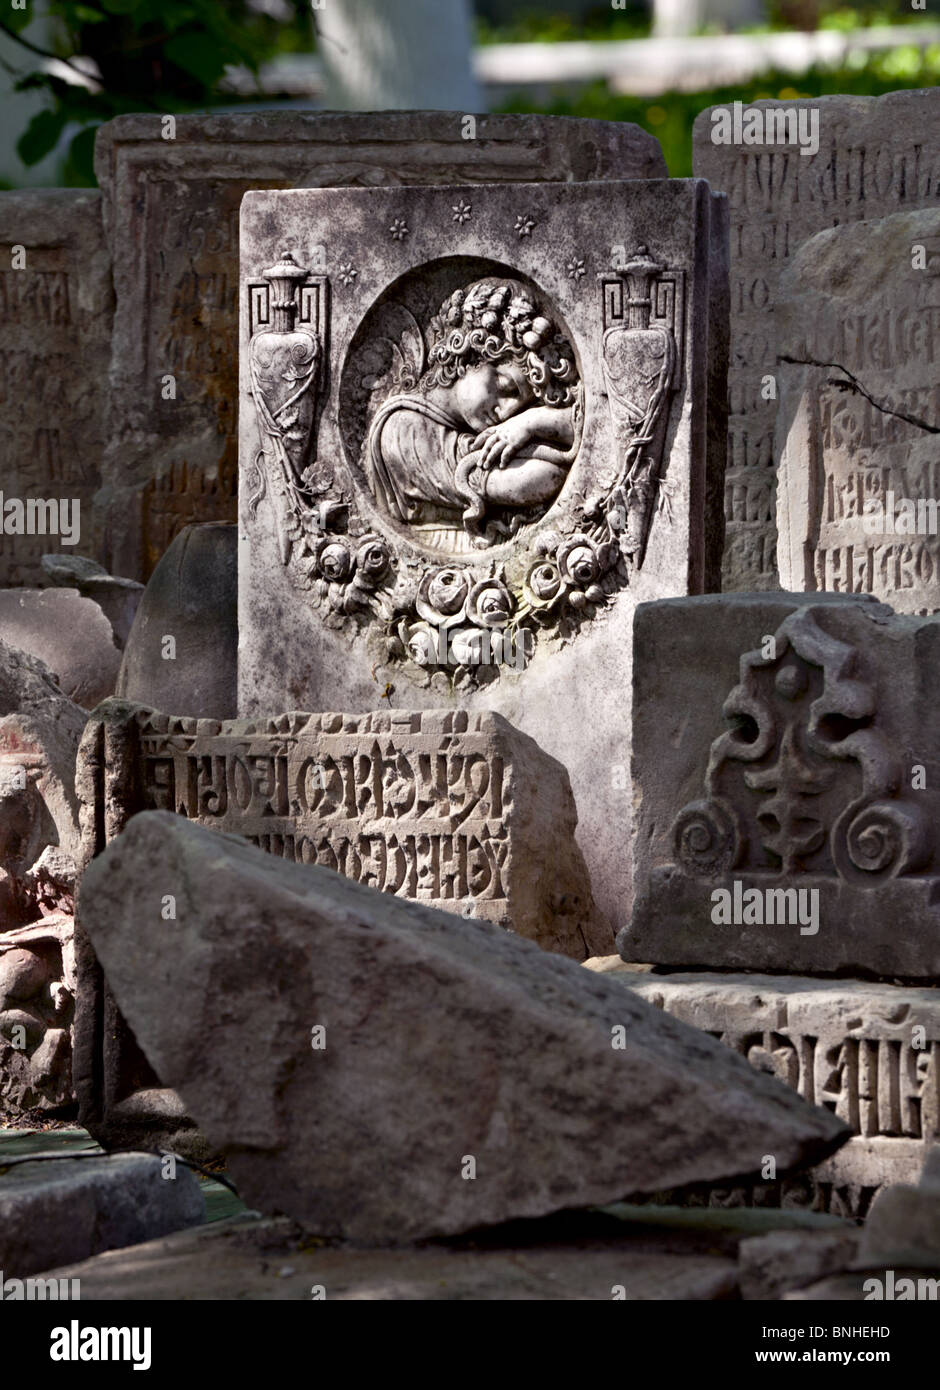 La antigua lápida con viejos epitafio cirílico, necrópolis de monasterio Donskoy, Moscú Foto de stock